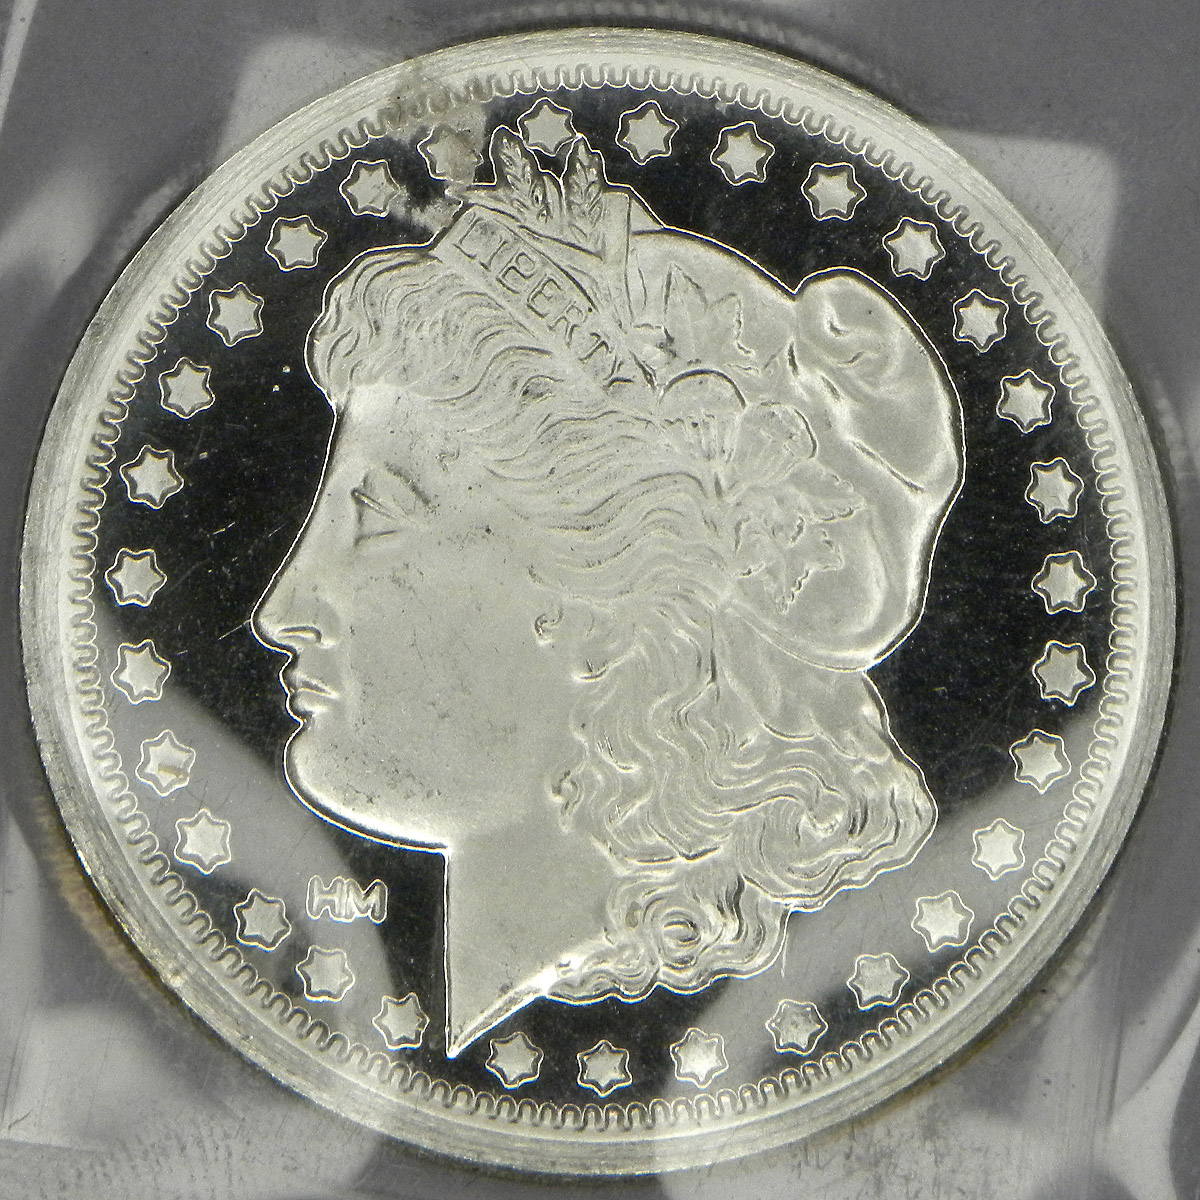 Silver Round with Morgan Dollar design (obverse)